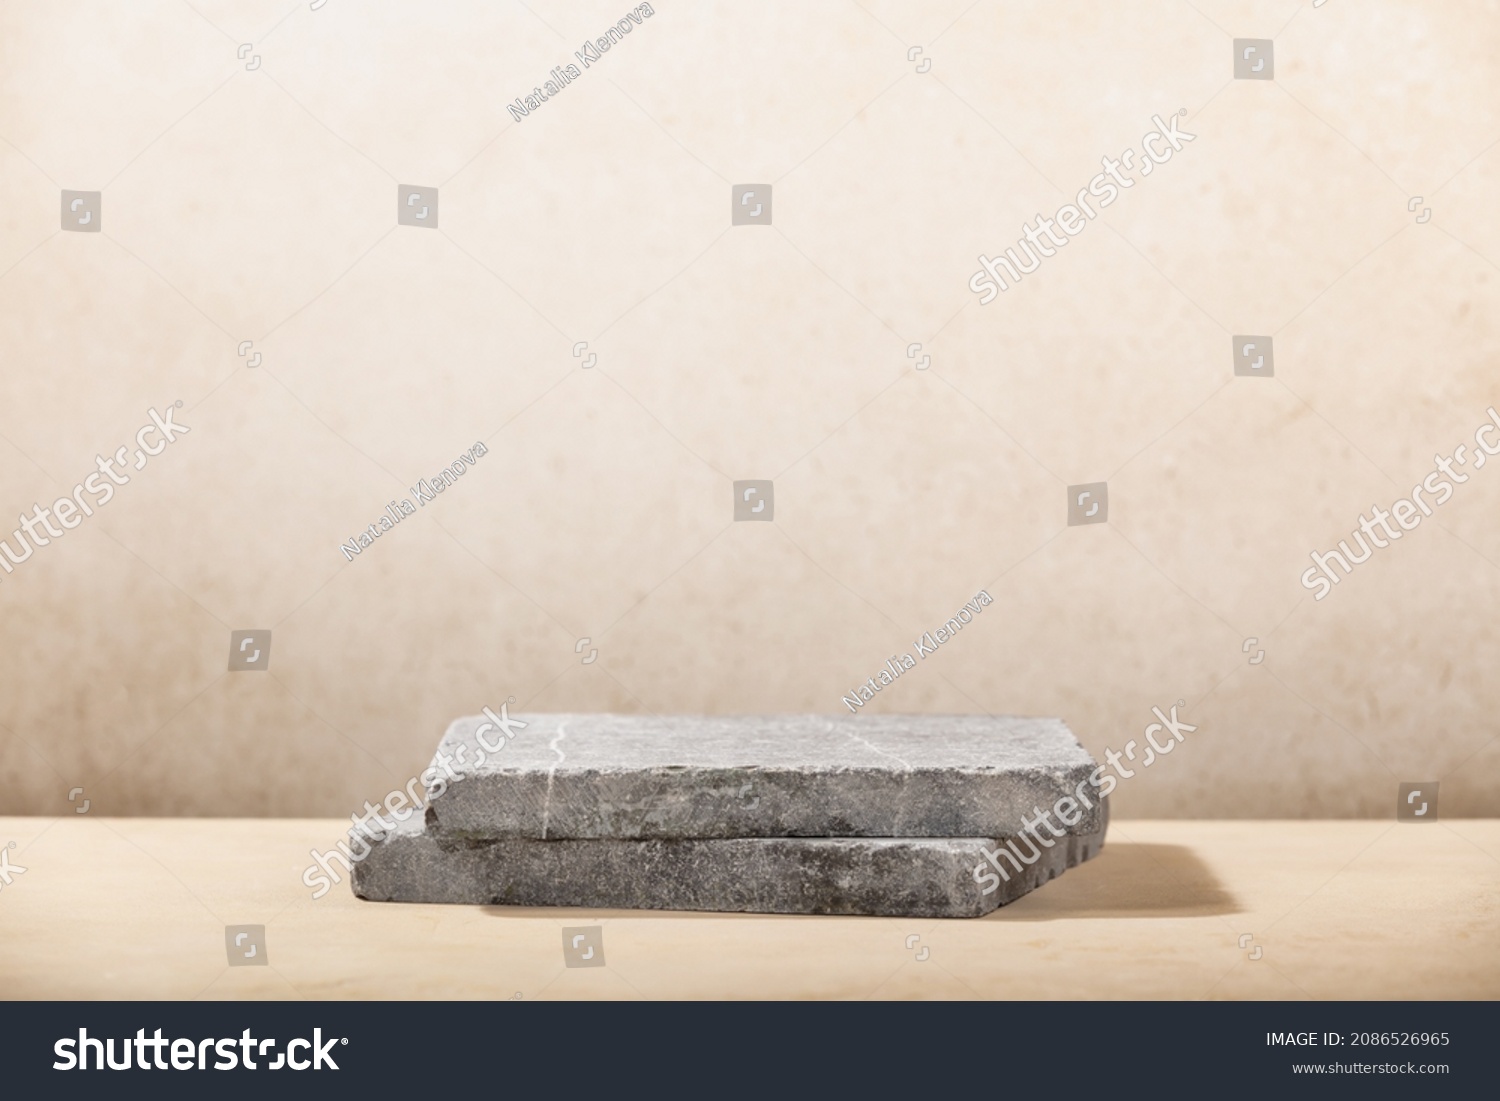 Monochrome beige template for mockup, banner. Flat granite pedestal on beige background. Stone stand for natural design concept. Horizontal image, center composition, hard light, front view #2086526965